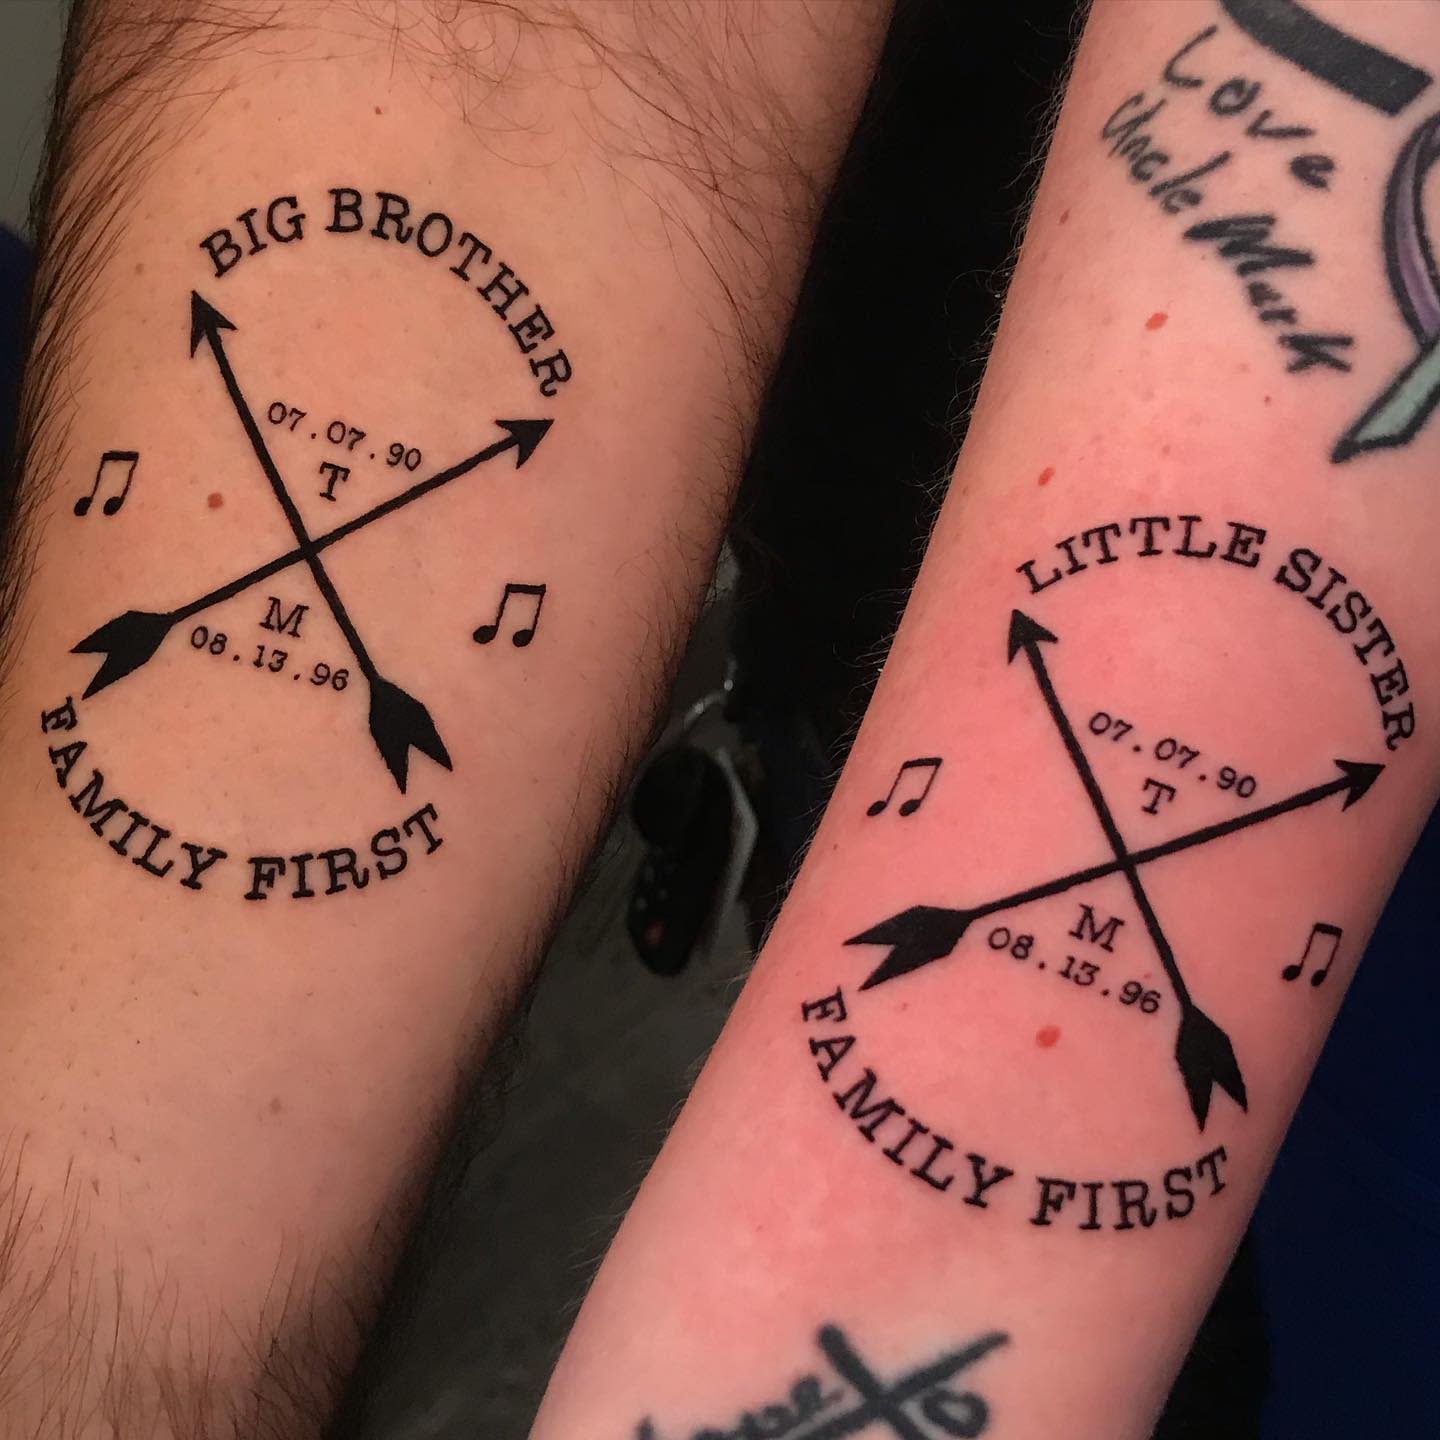 Some cool tattoos for a brother and sister #blackandgreytattoo  #colourtqttoo #sun #family #Ink #Inkedmag #Tattoolife #Tattooed #Tats  #Ta... | Instagram